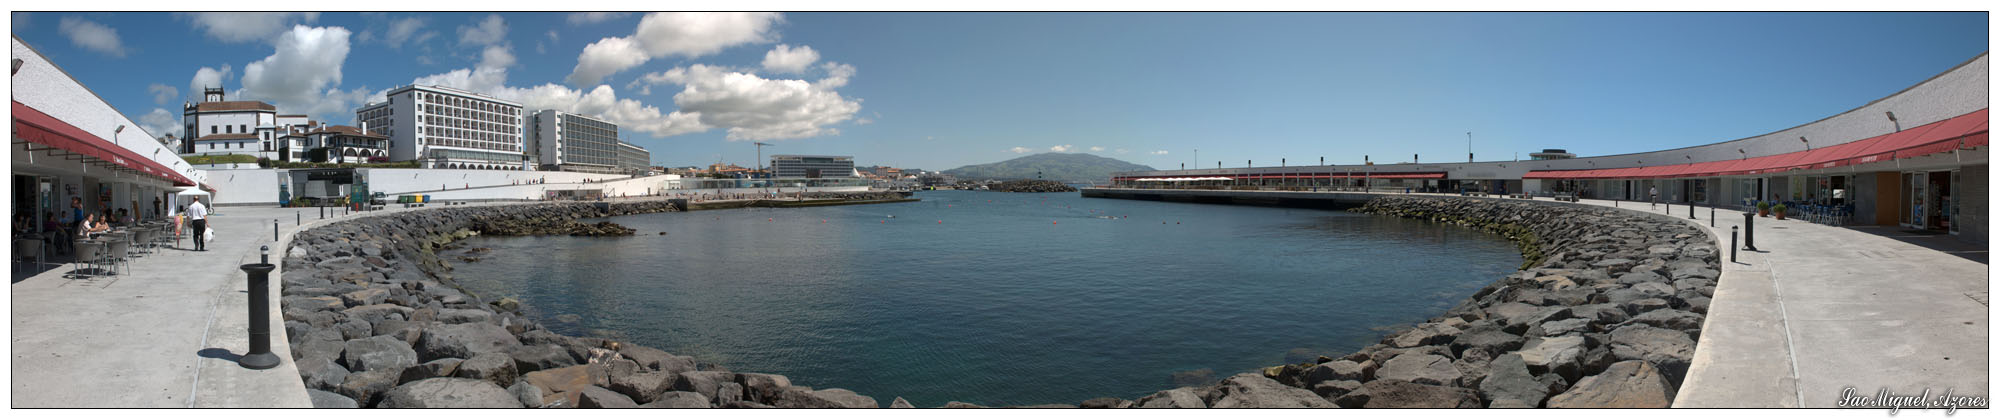 Portas do Mar in Ponta Delgada -2- (Sao Miguel, Azoren)